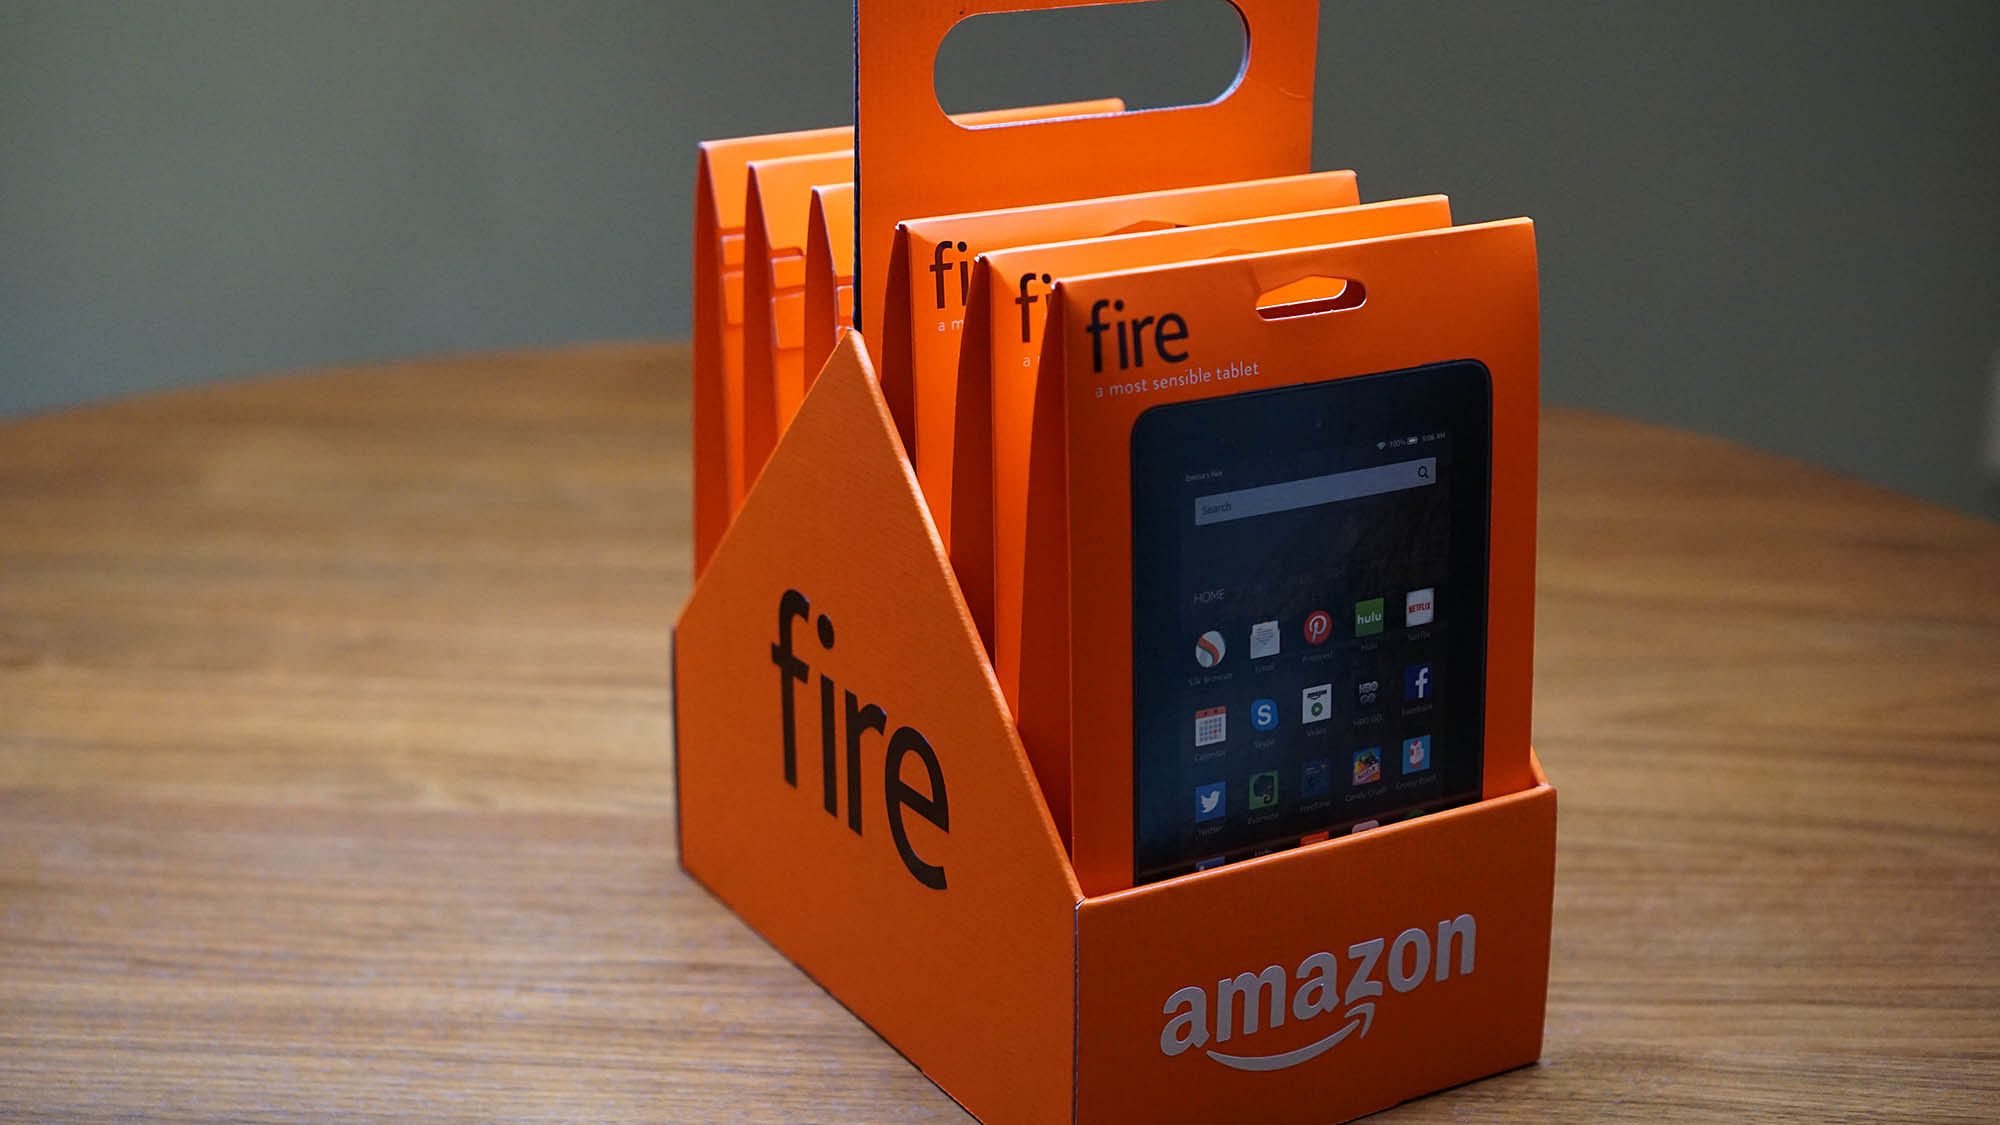 Amazon Fire tablet. (Photo: Amazon)